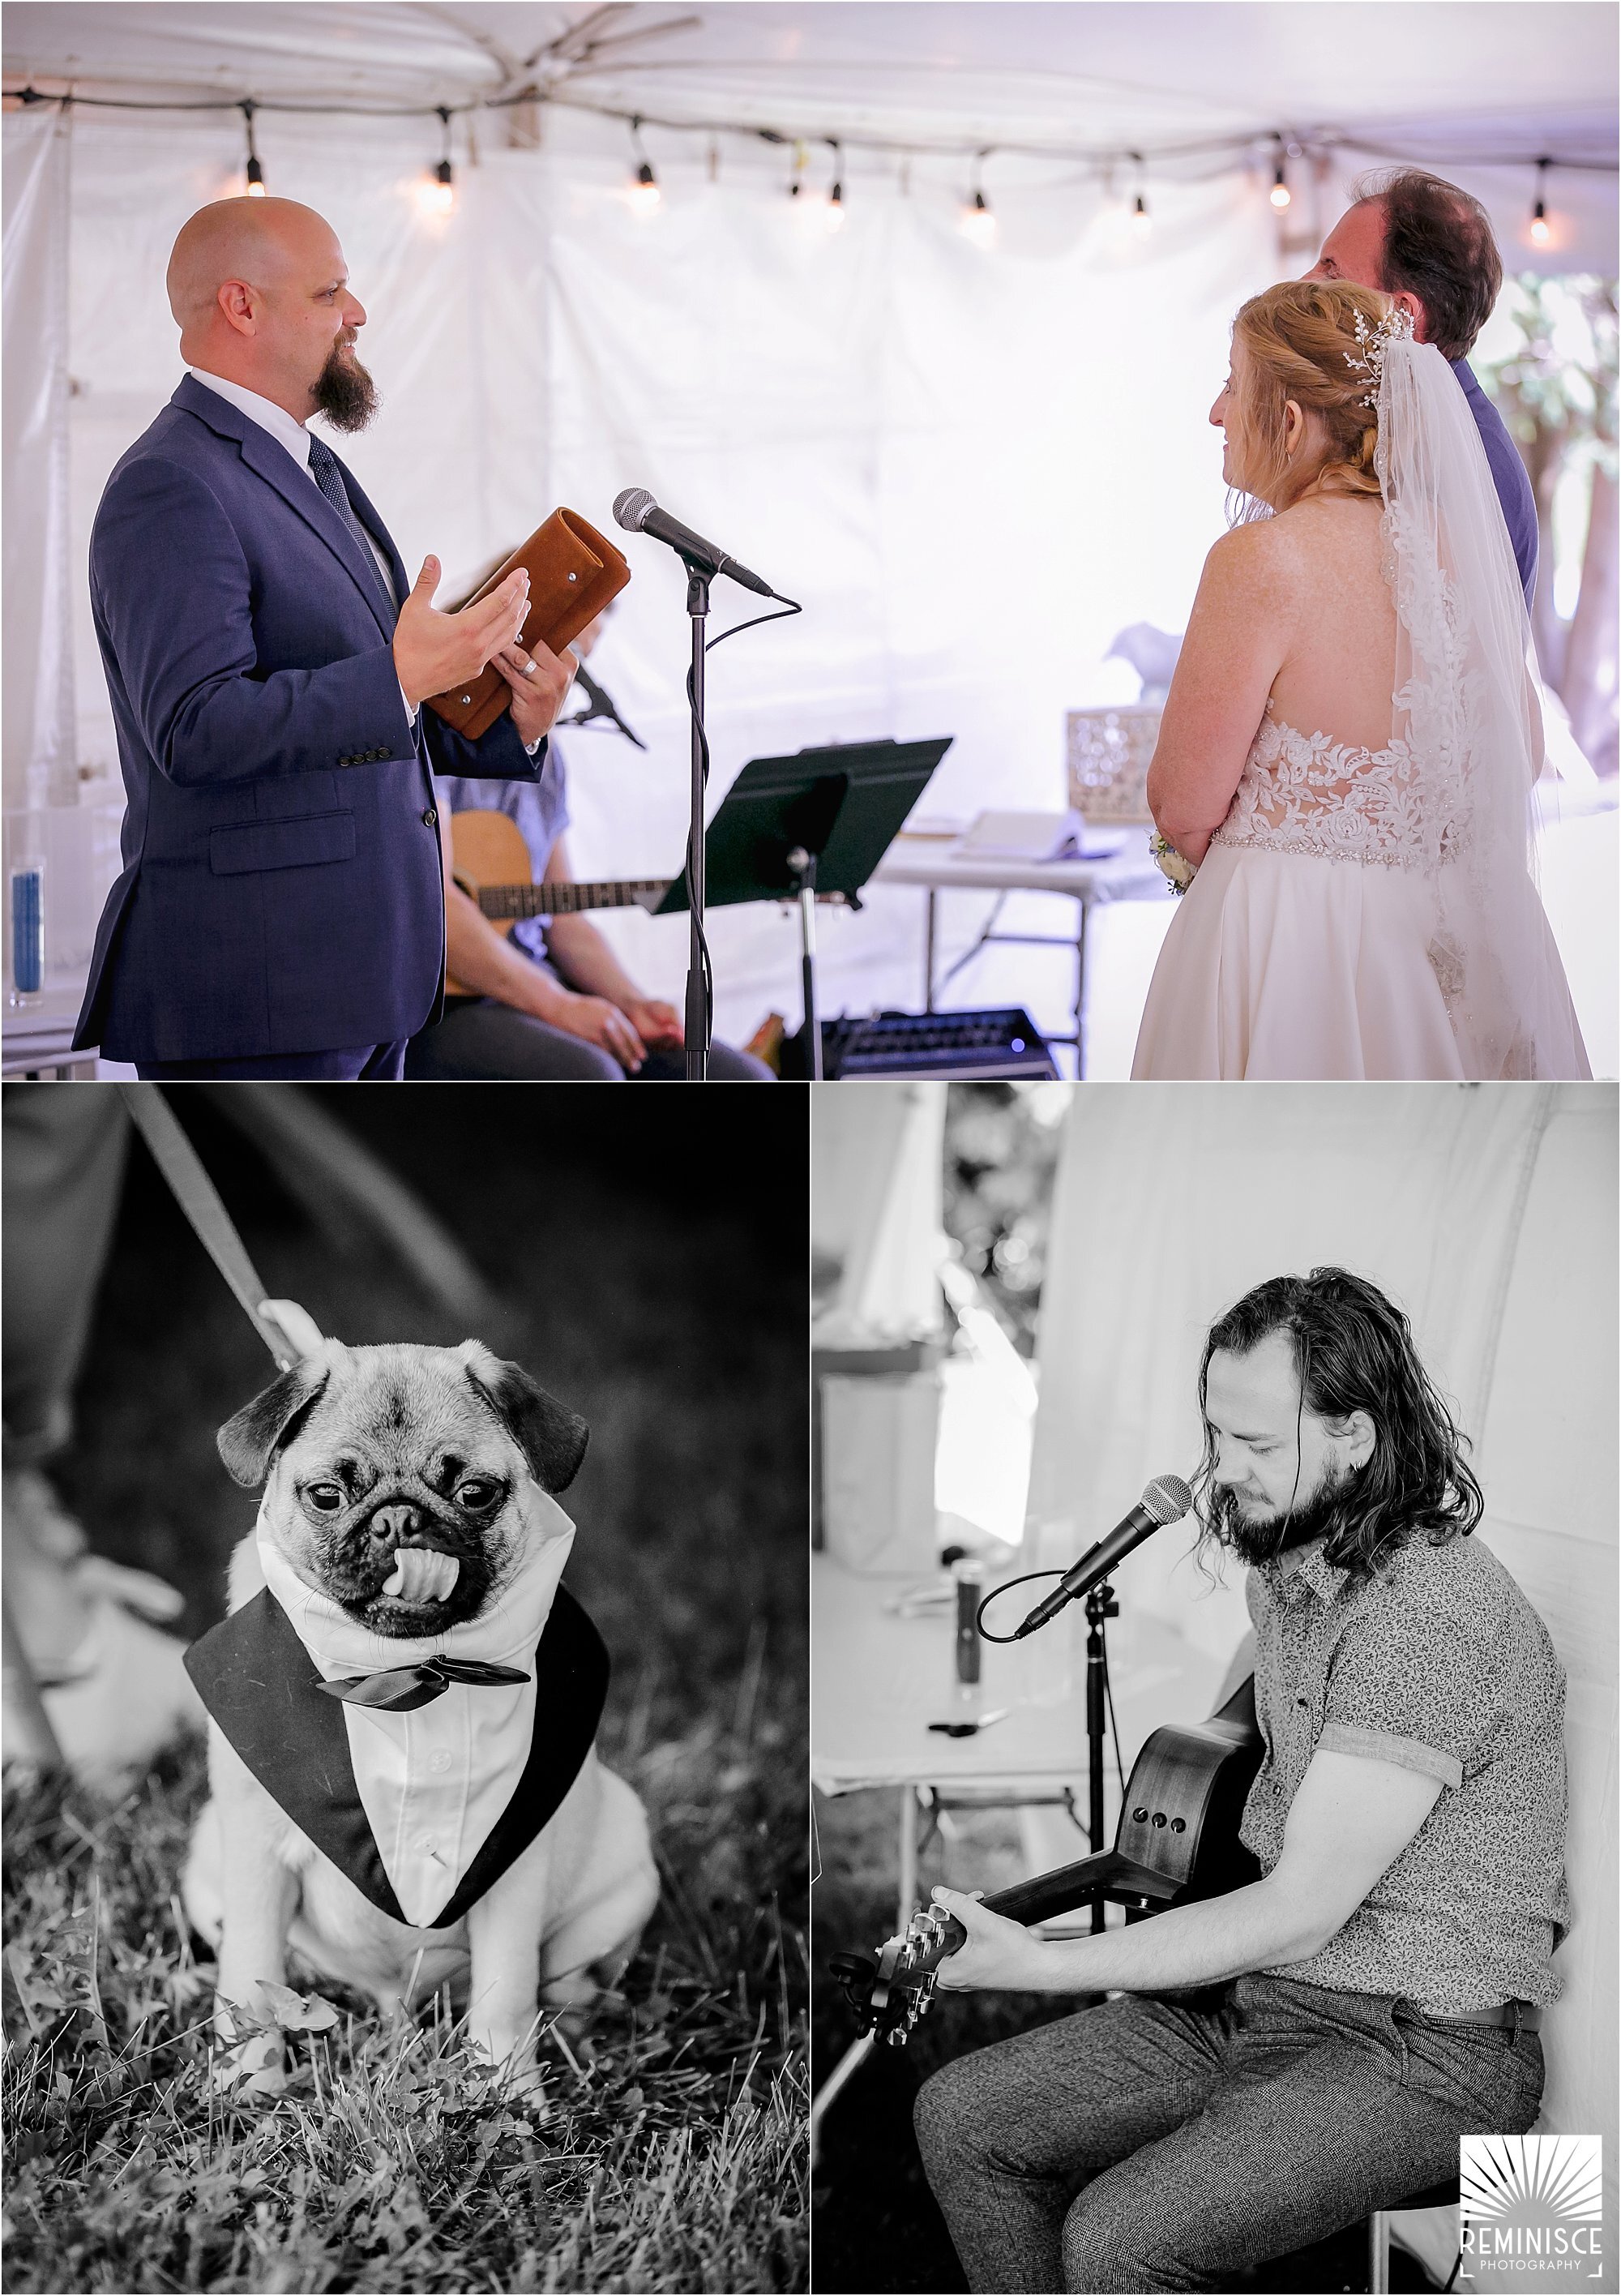 08-fall-backyard-wedding-ceremony-musician-officiant.jpg